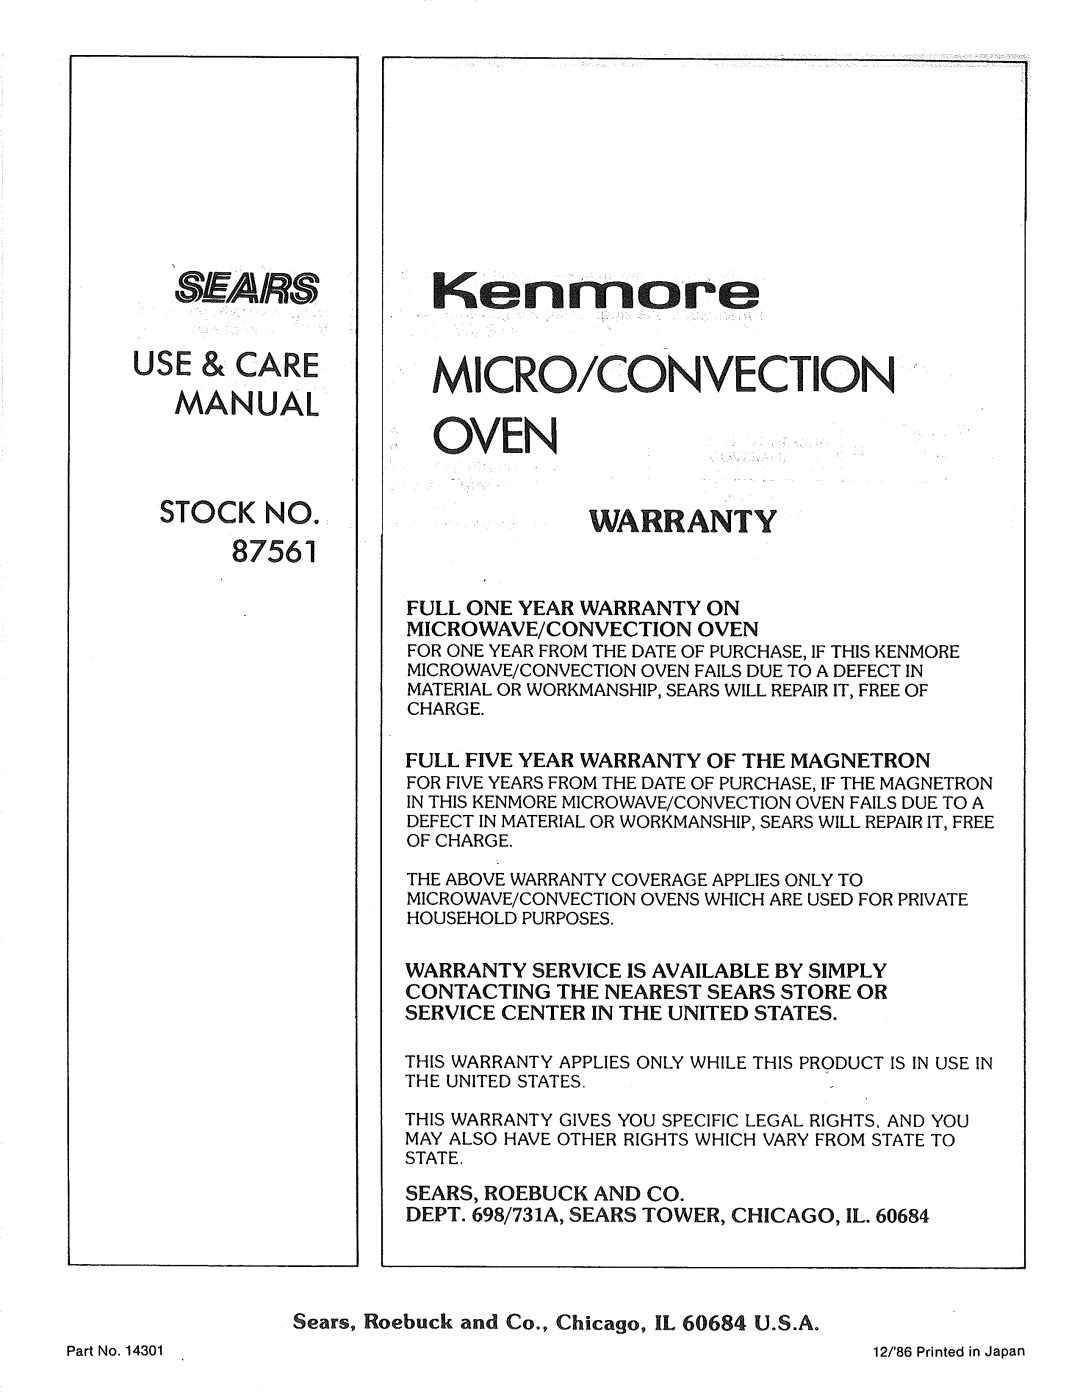 Kenmore manual Oven, SEA/,qs, Micro/Convection, Kenmore, Warranty, Use & Care Manual, STOCK NO 87561 